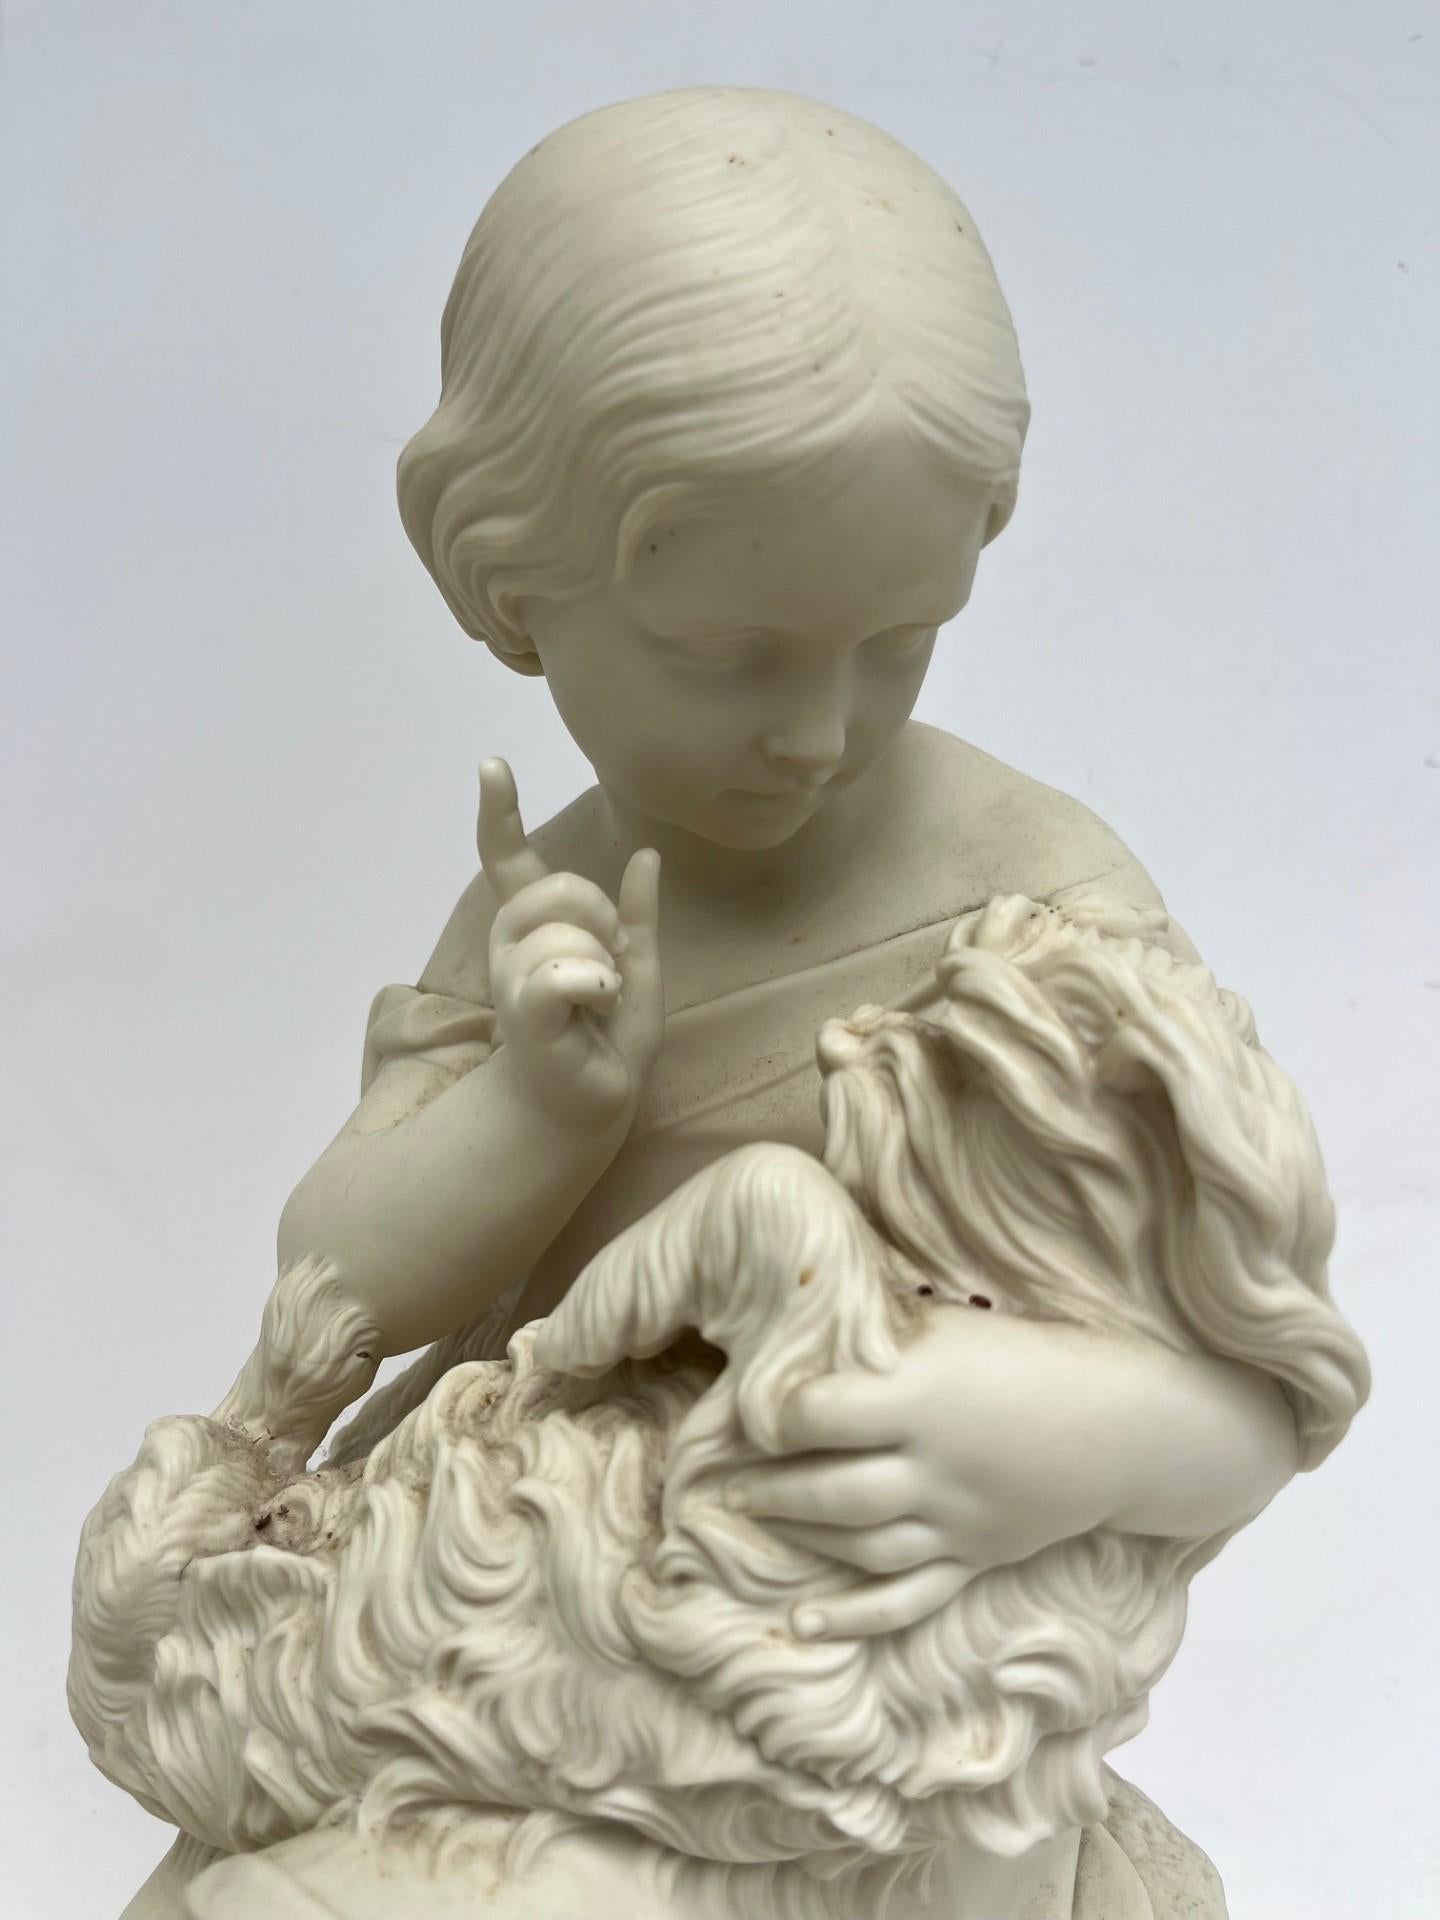 Romantic Antique English Bisque Sculpture Signed J. Durham 1814-1877. For Sale